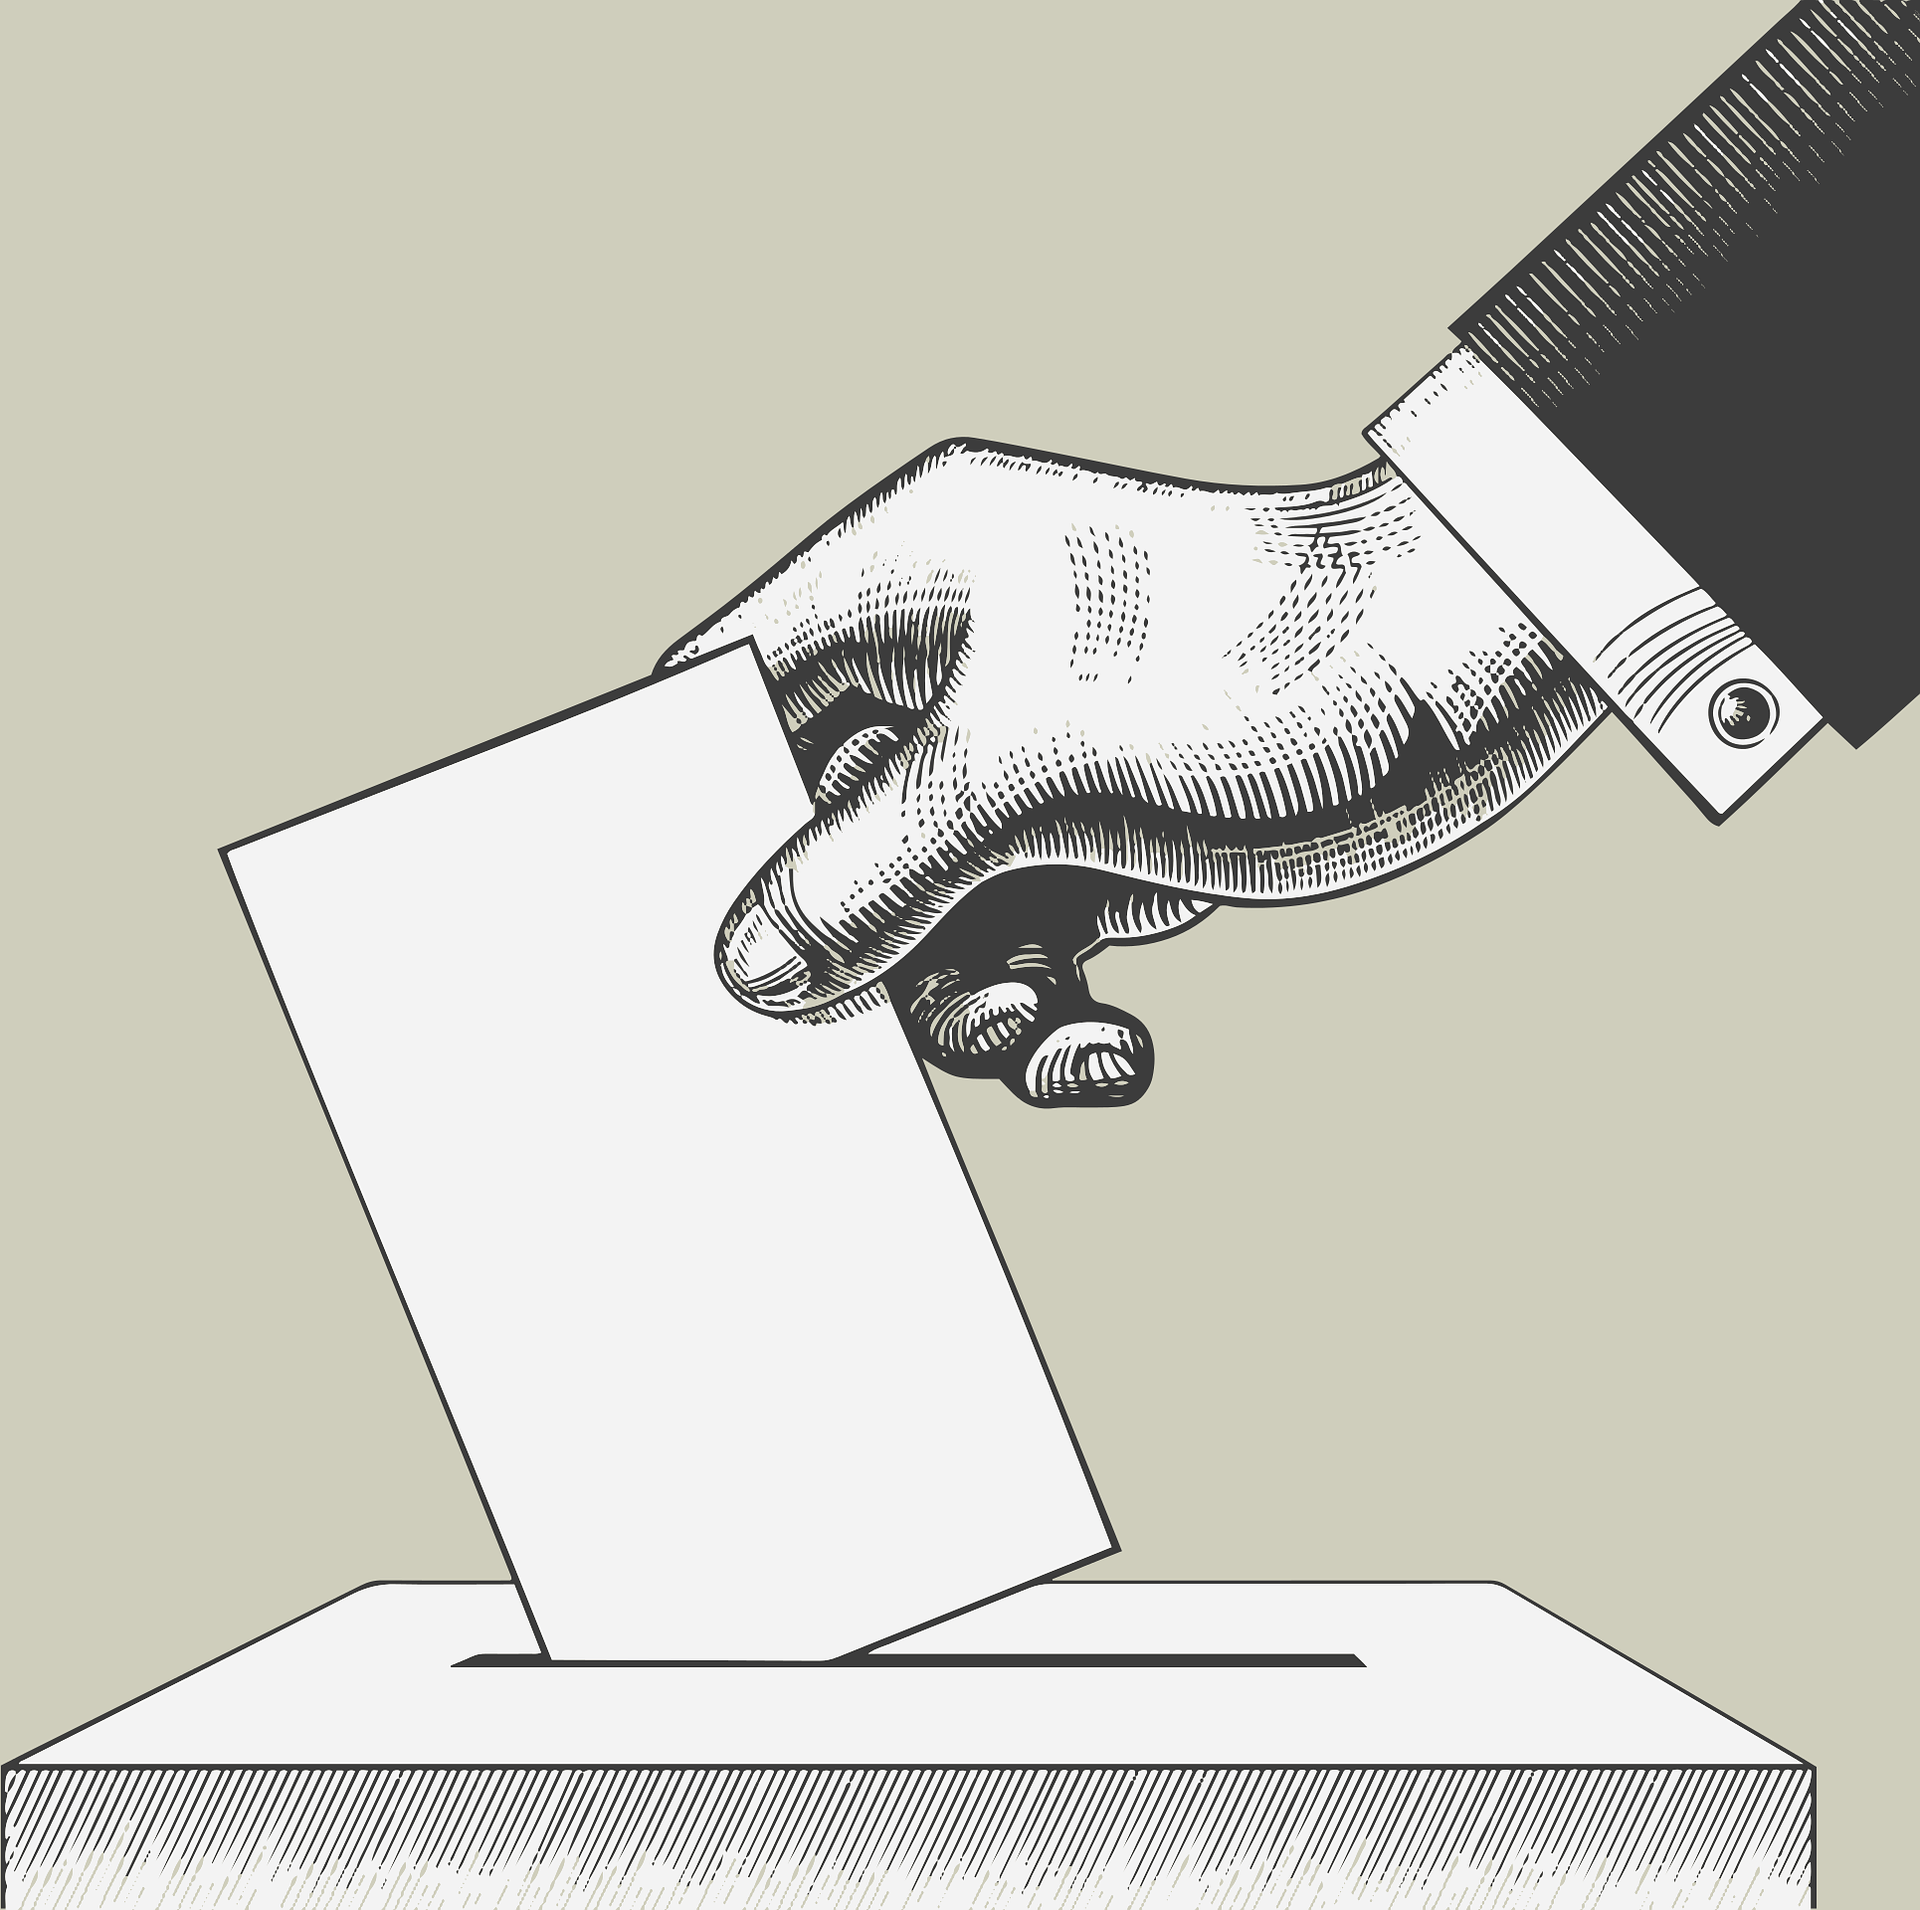 Voto obligatorio versus voto voluntario